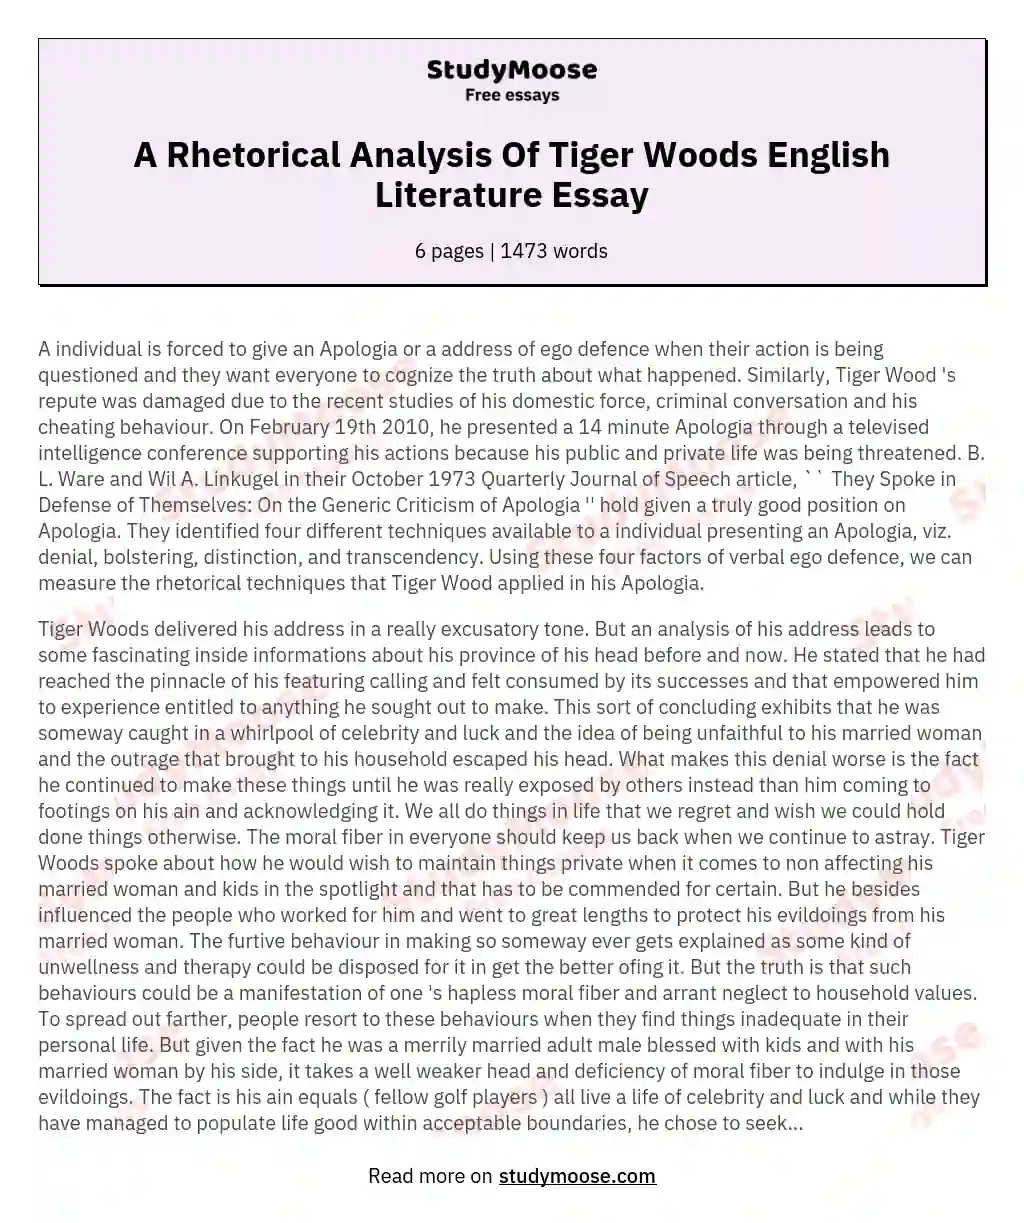 A Rhetorical Analysis Of Tiger Woods English Literature Essay